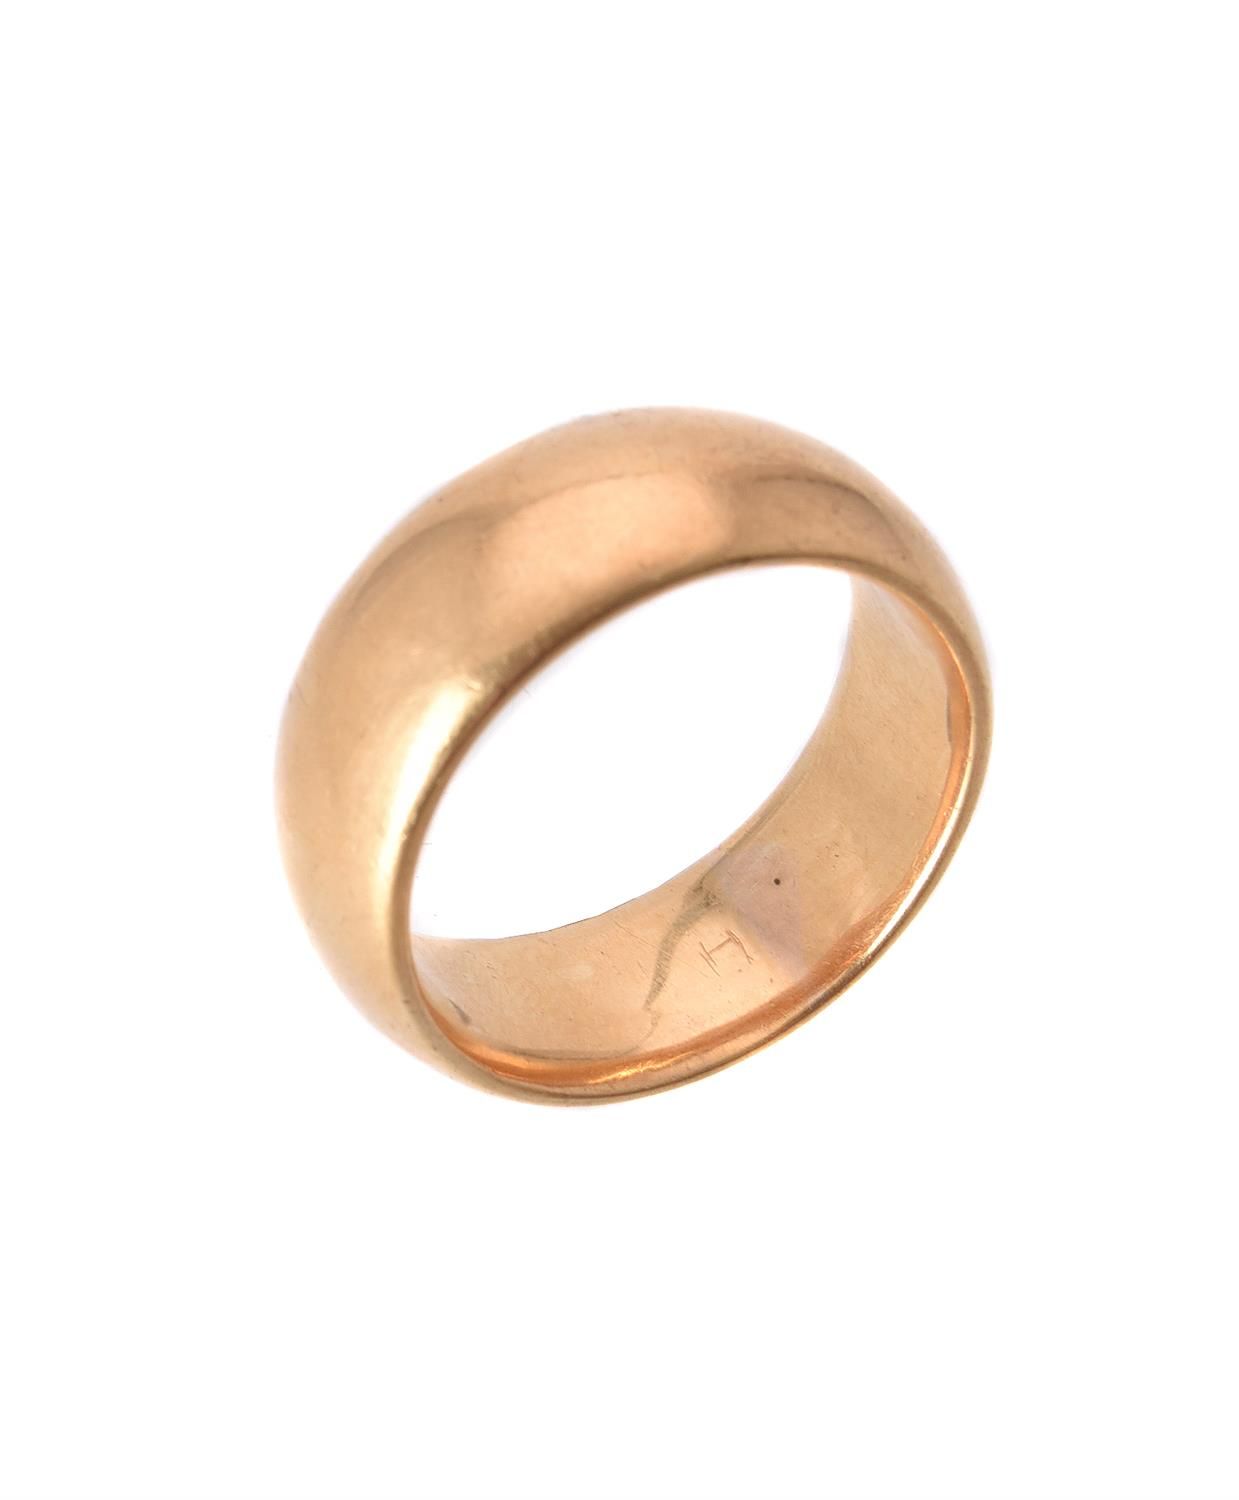 An 18 carat gold broad band ring 一枚18K金宽带戒指，抛光带有伯明翰1915年印记，制造商标记M&M，手指尺寸V，18.6克